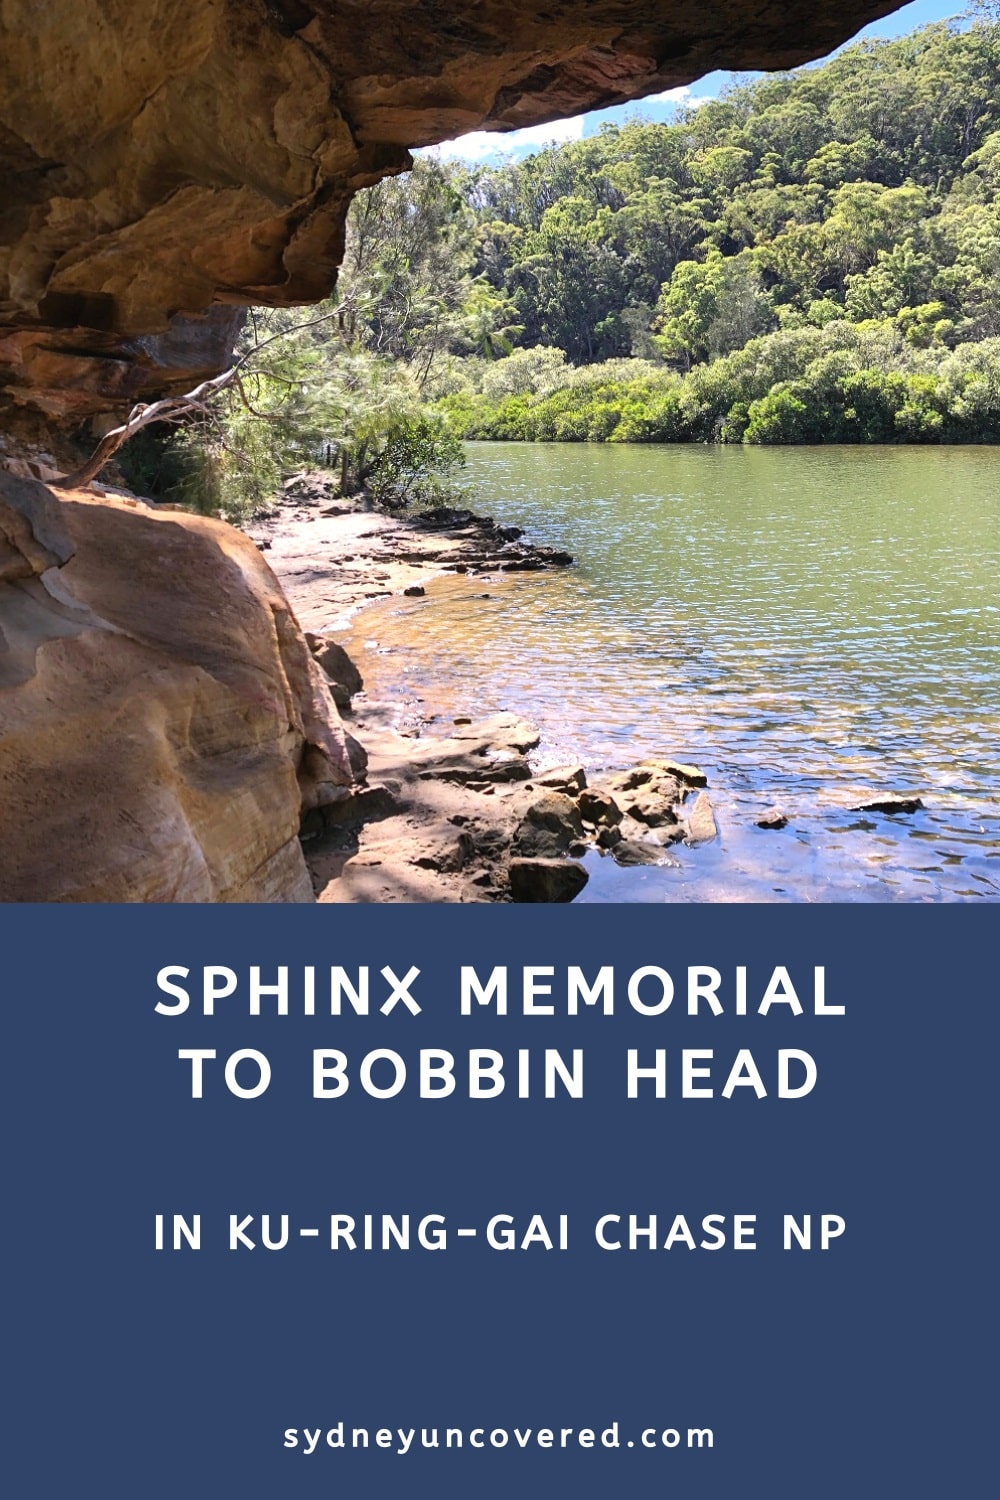 Sphinx Memorial to Bobbin Head in Ku-ring-gai Chase NP